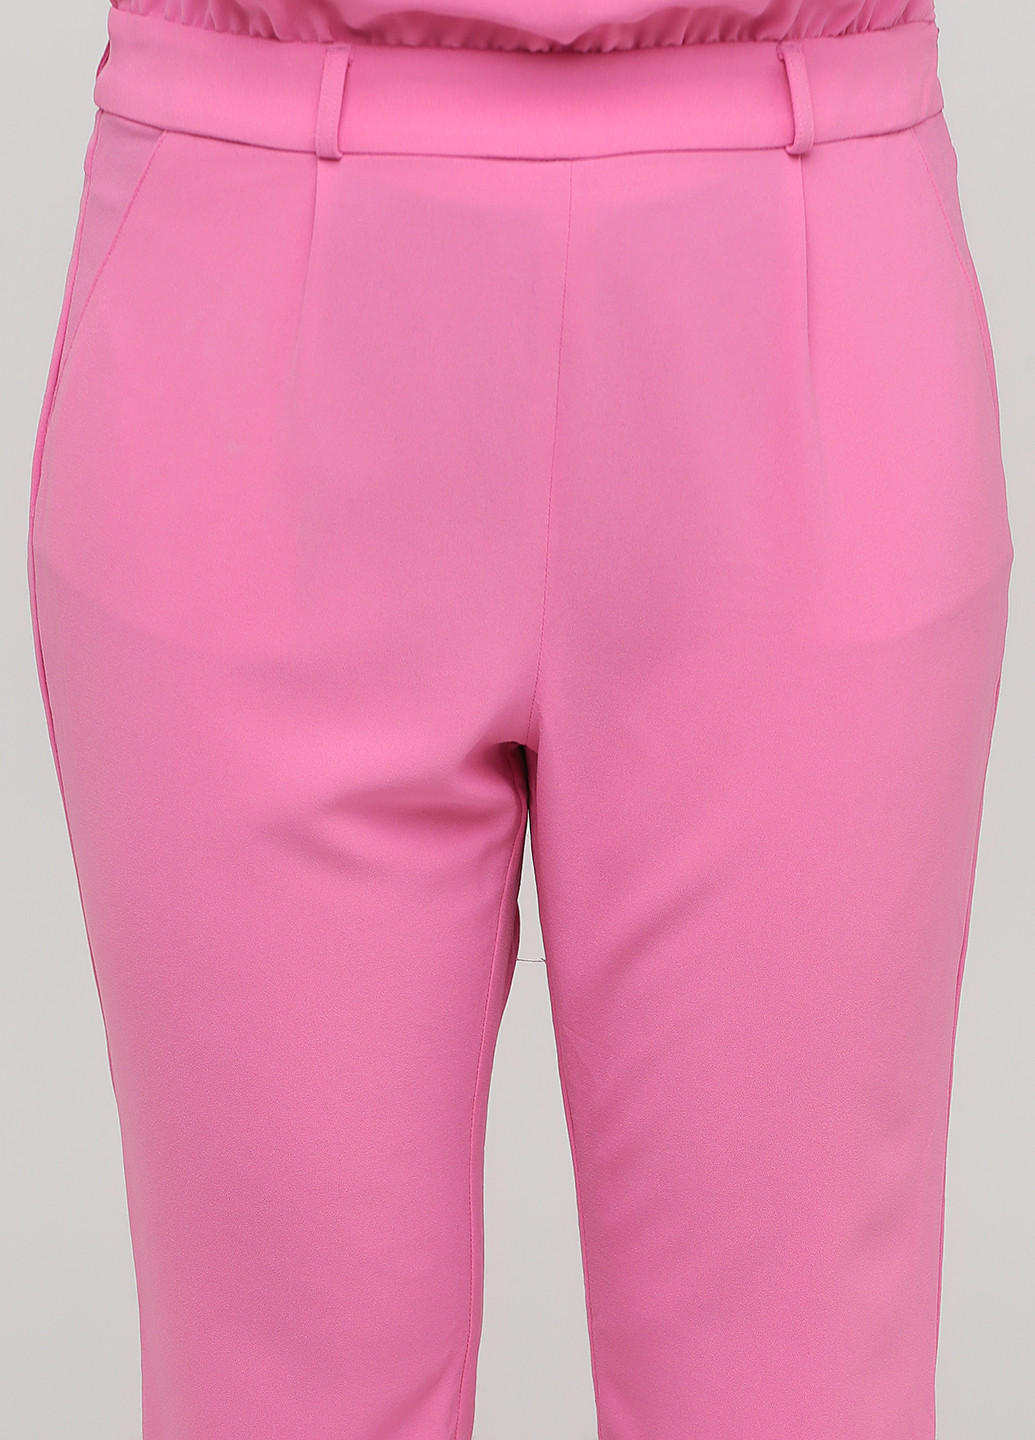 Комбинезон Vero Moda комбинезон-брюки анималистичный розовый кэжуал полиэстер